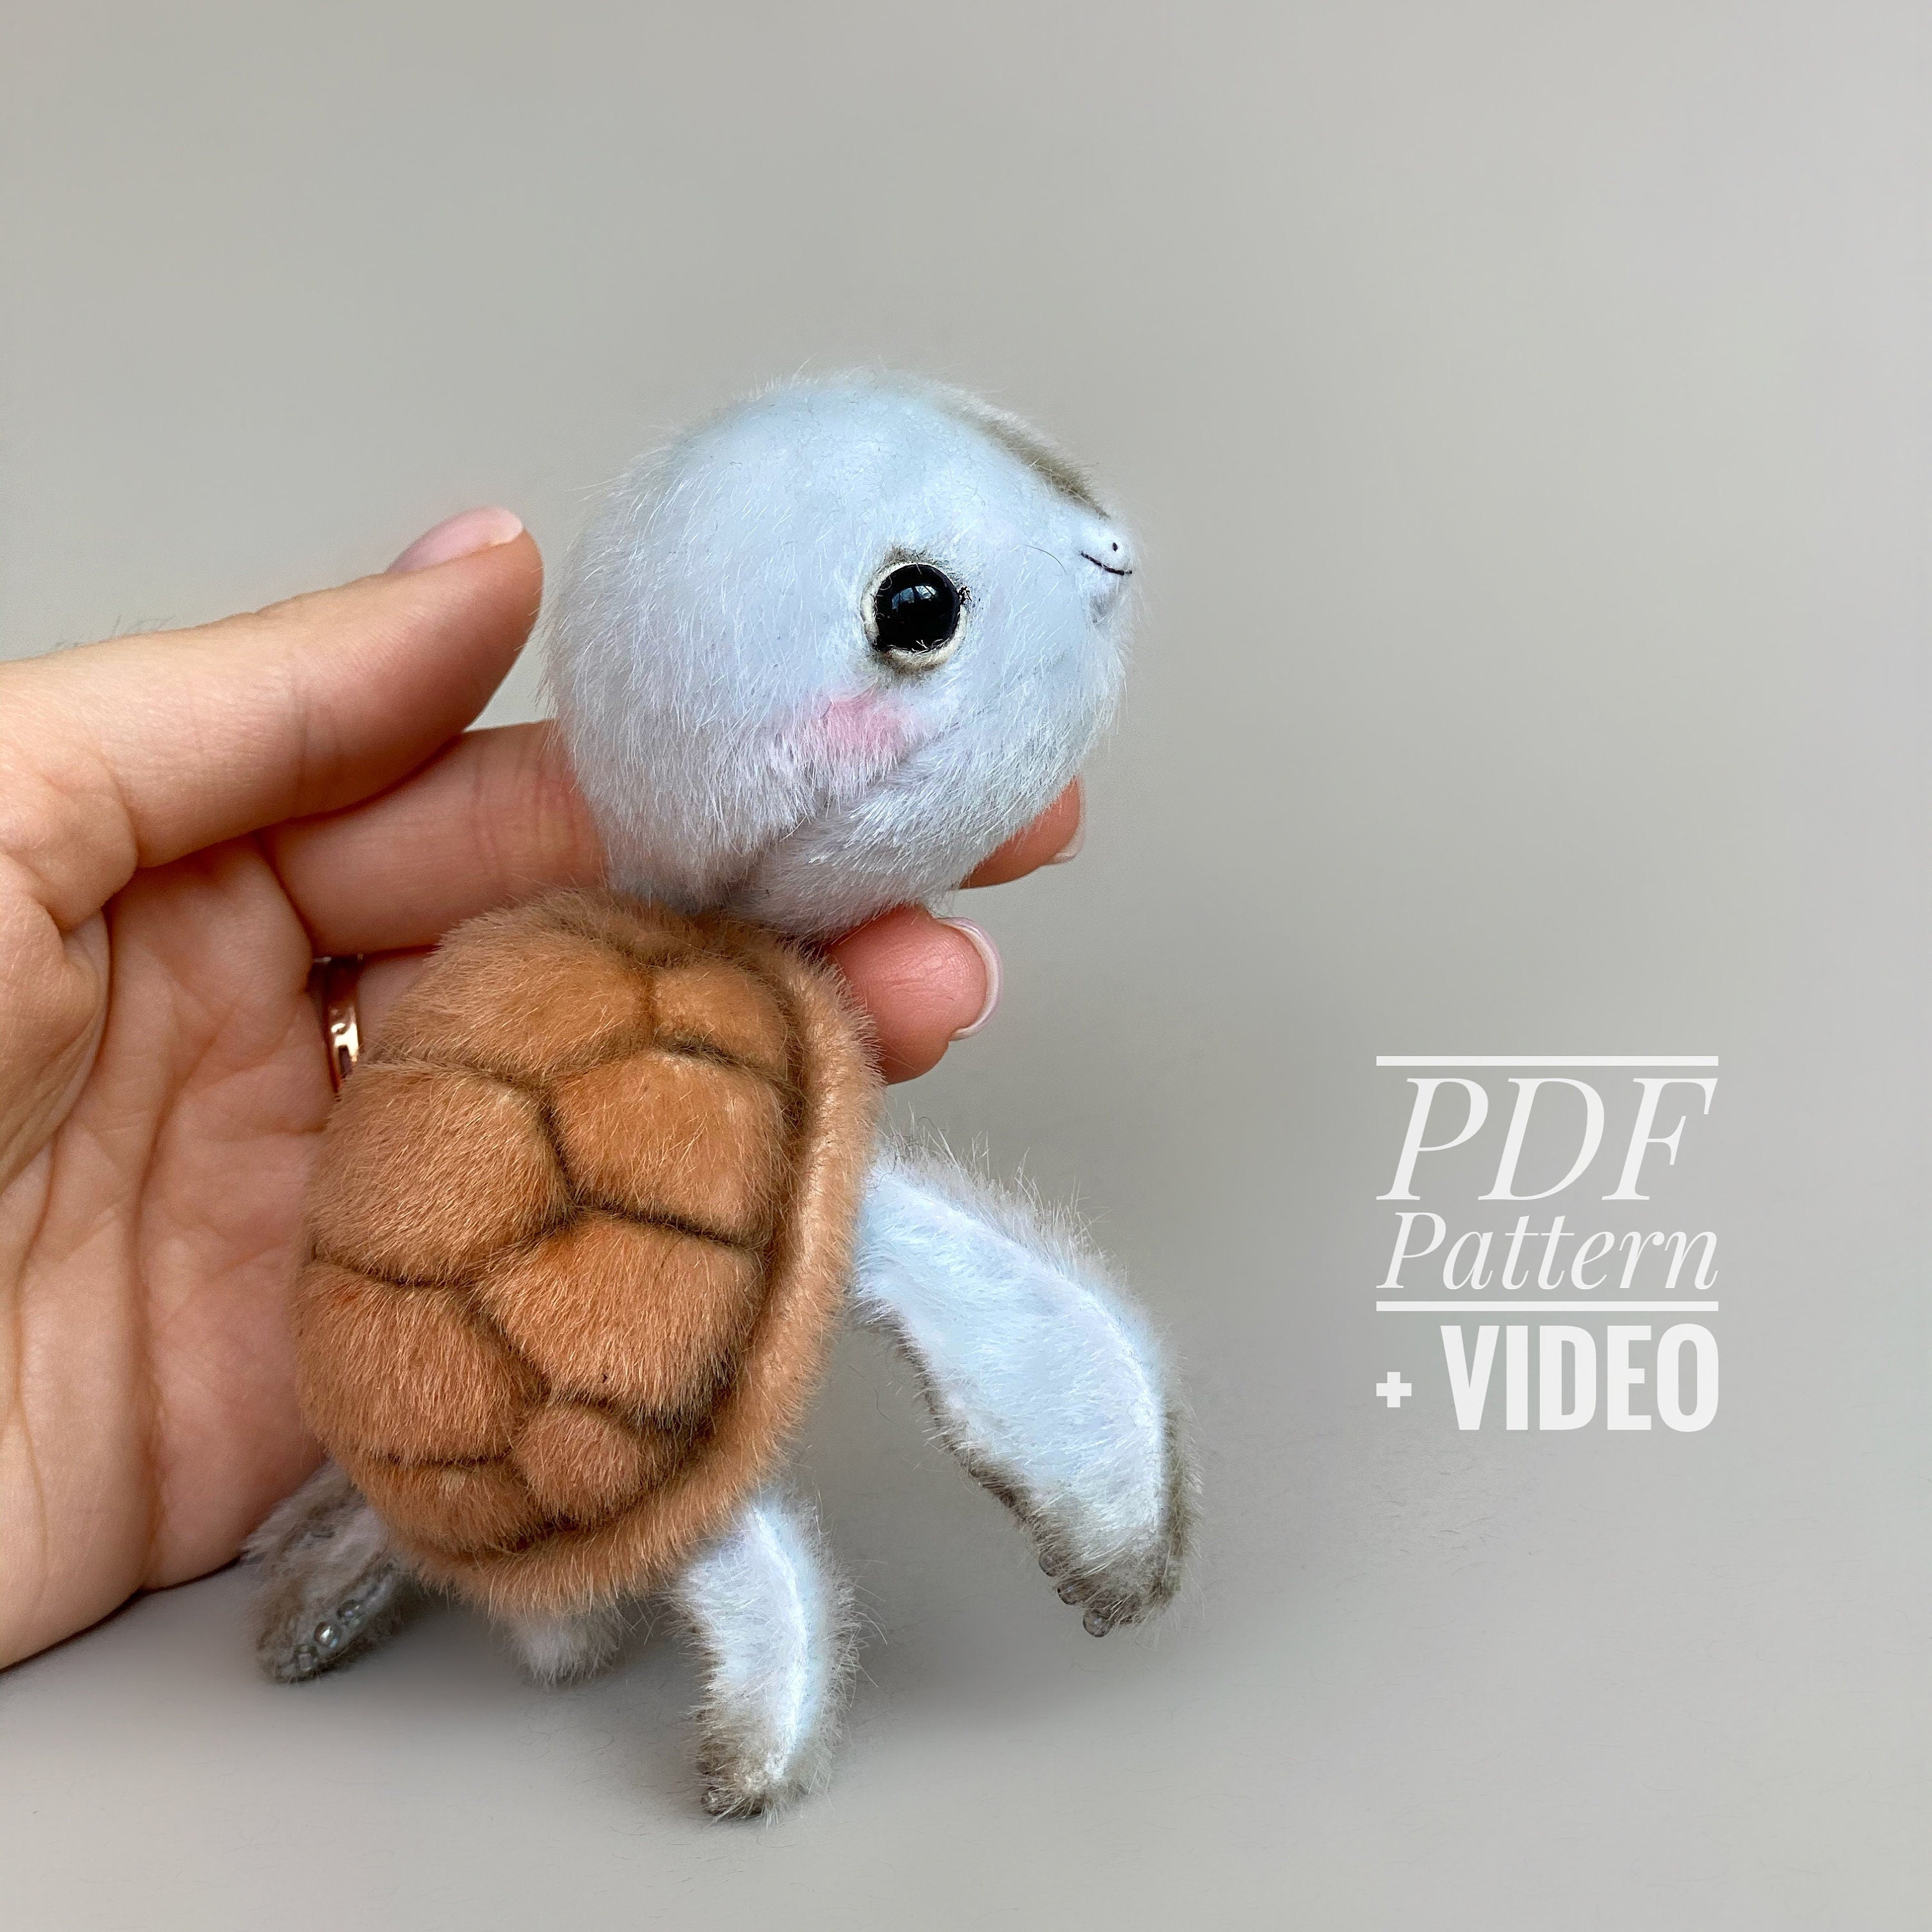 Turtle tortoise PDF sewing pattern Video tutorial DIY stuffed toy pattern DIY toy kids toy pattern easy to sew for beginners TSminibears